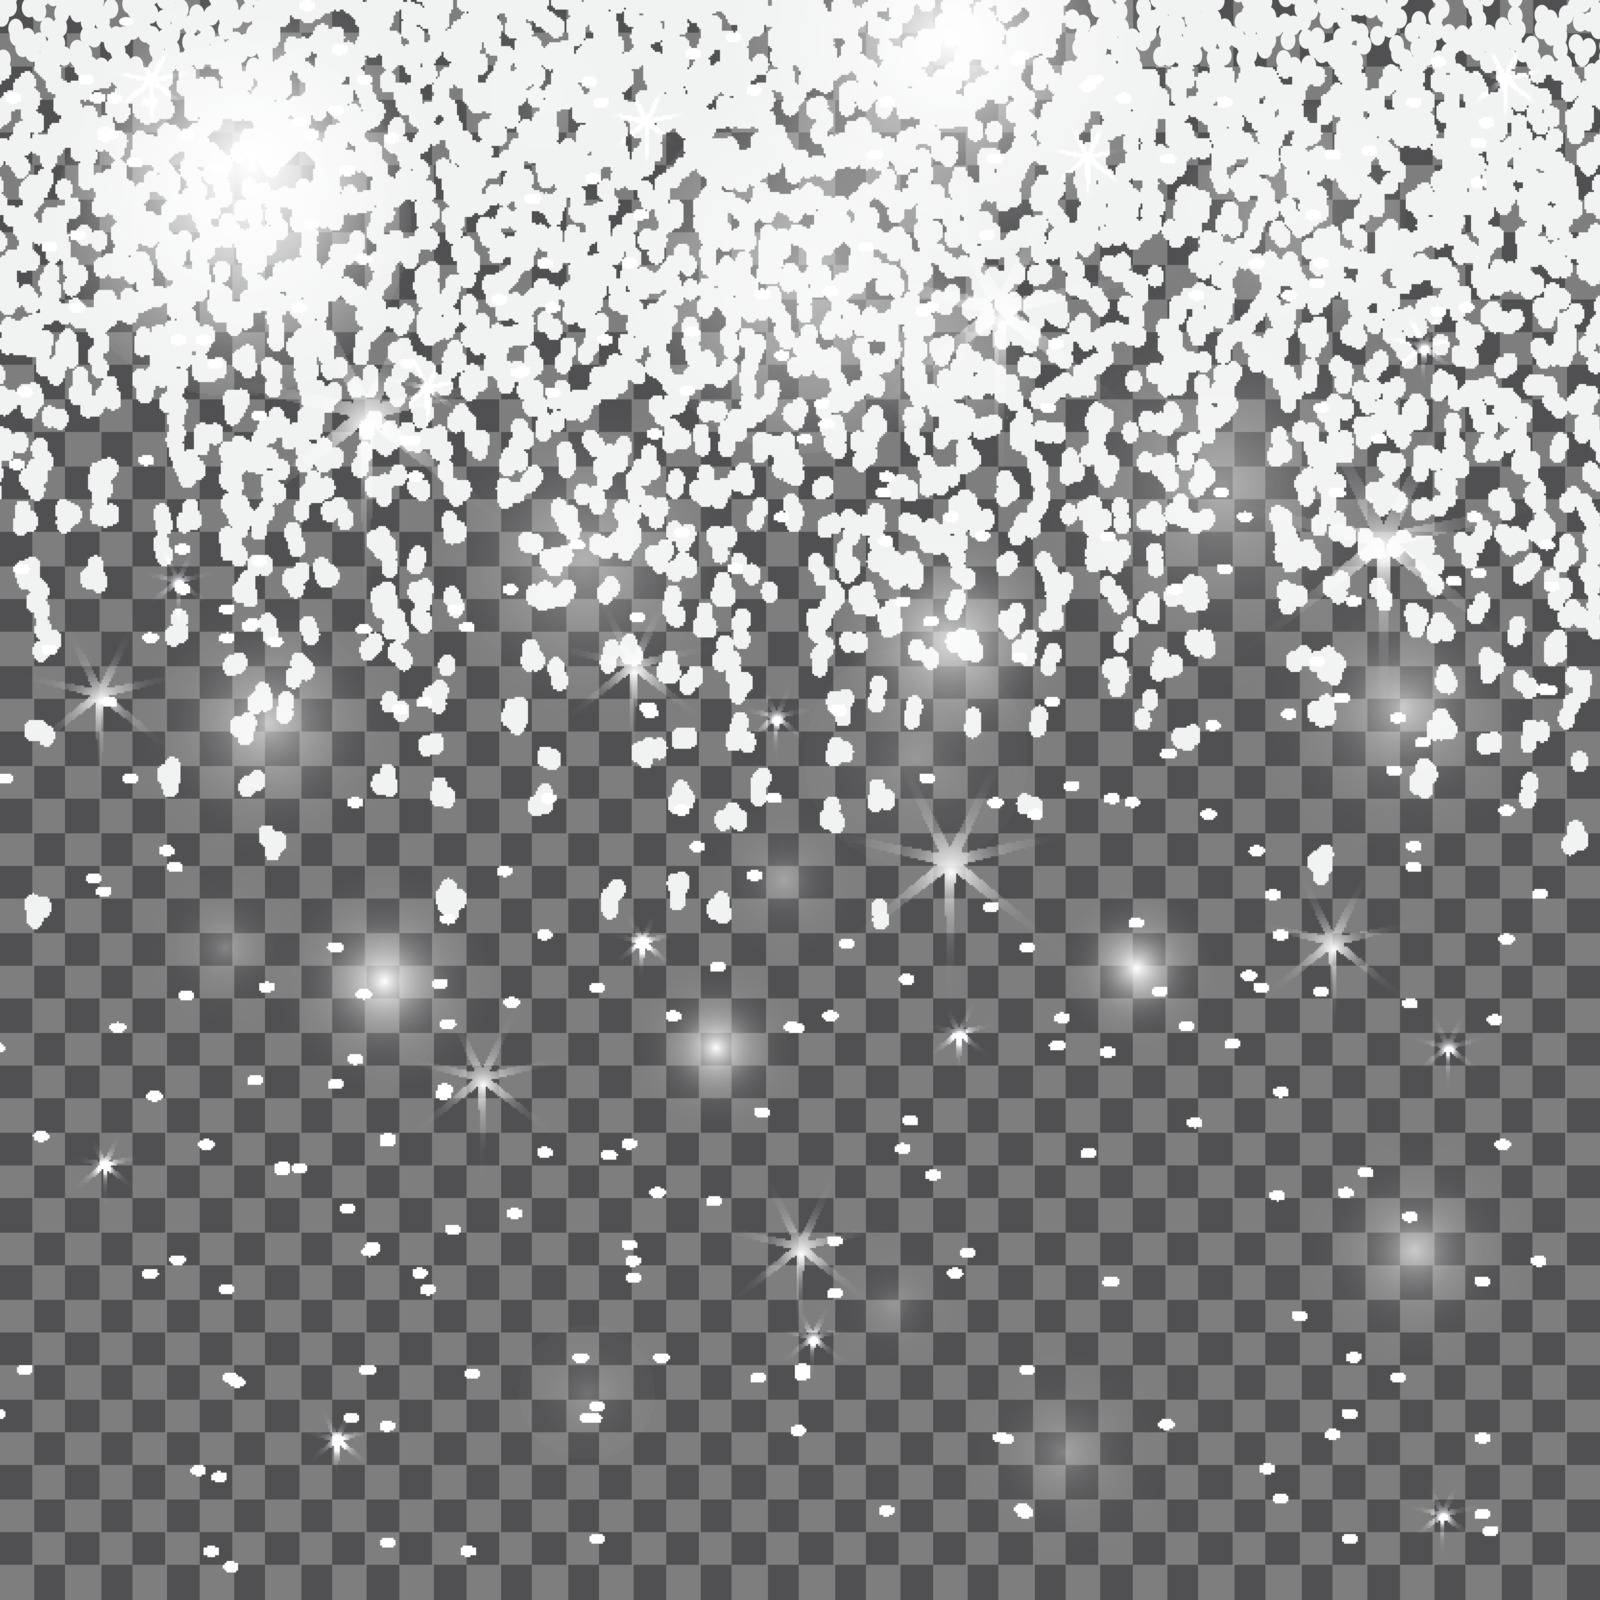 Falling snow backdrop on transparent background. Vector illustration.